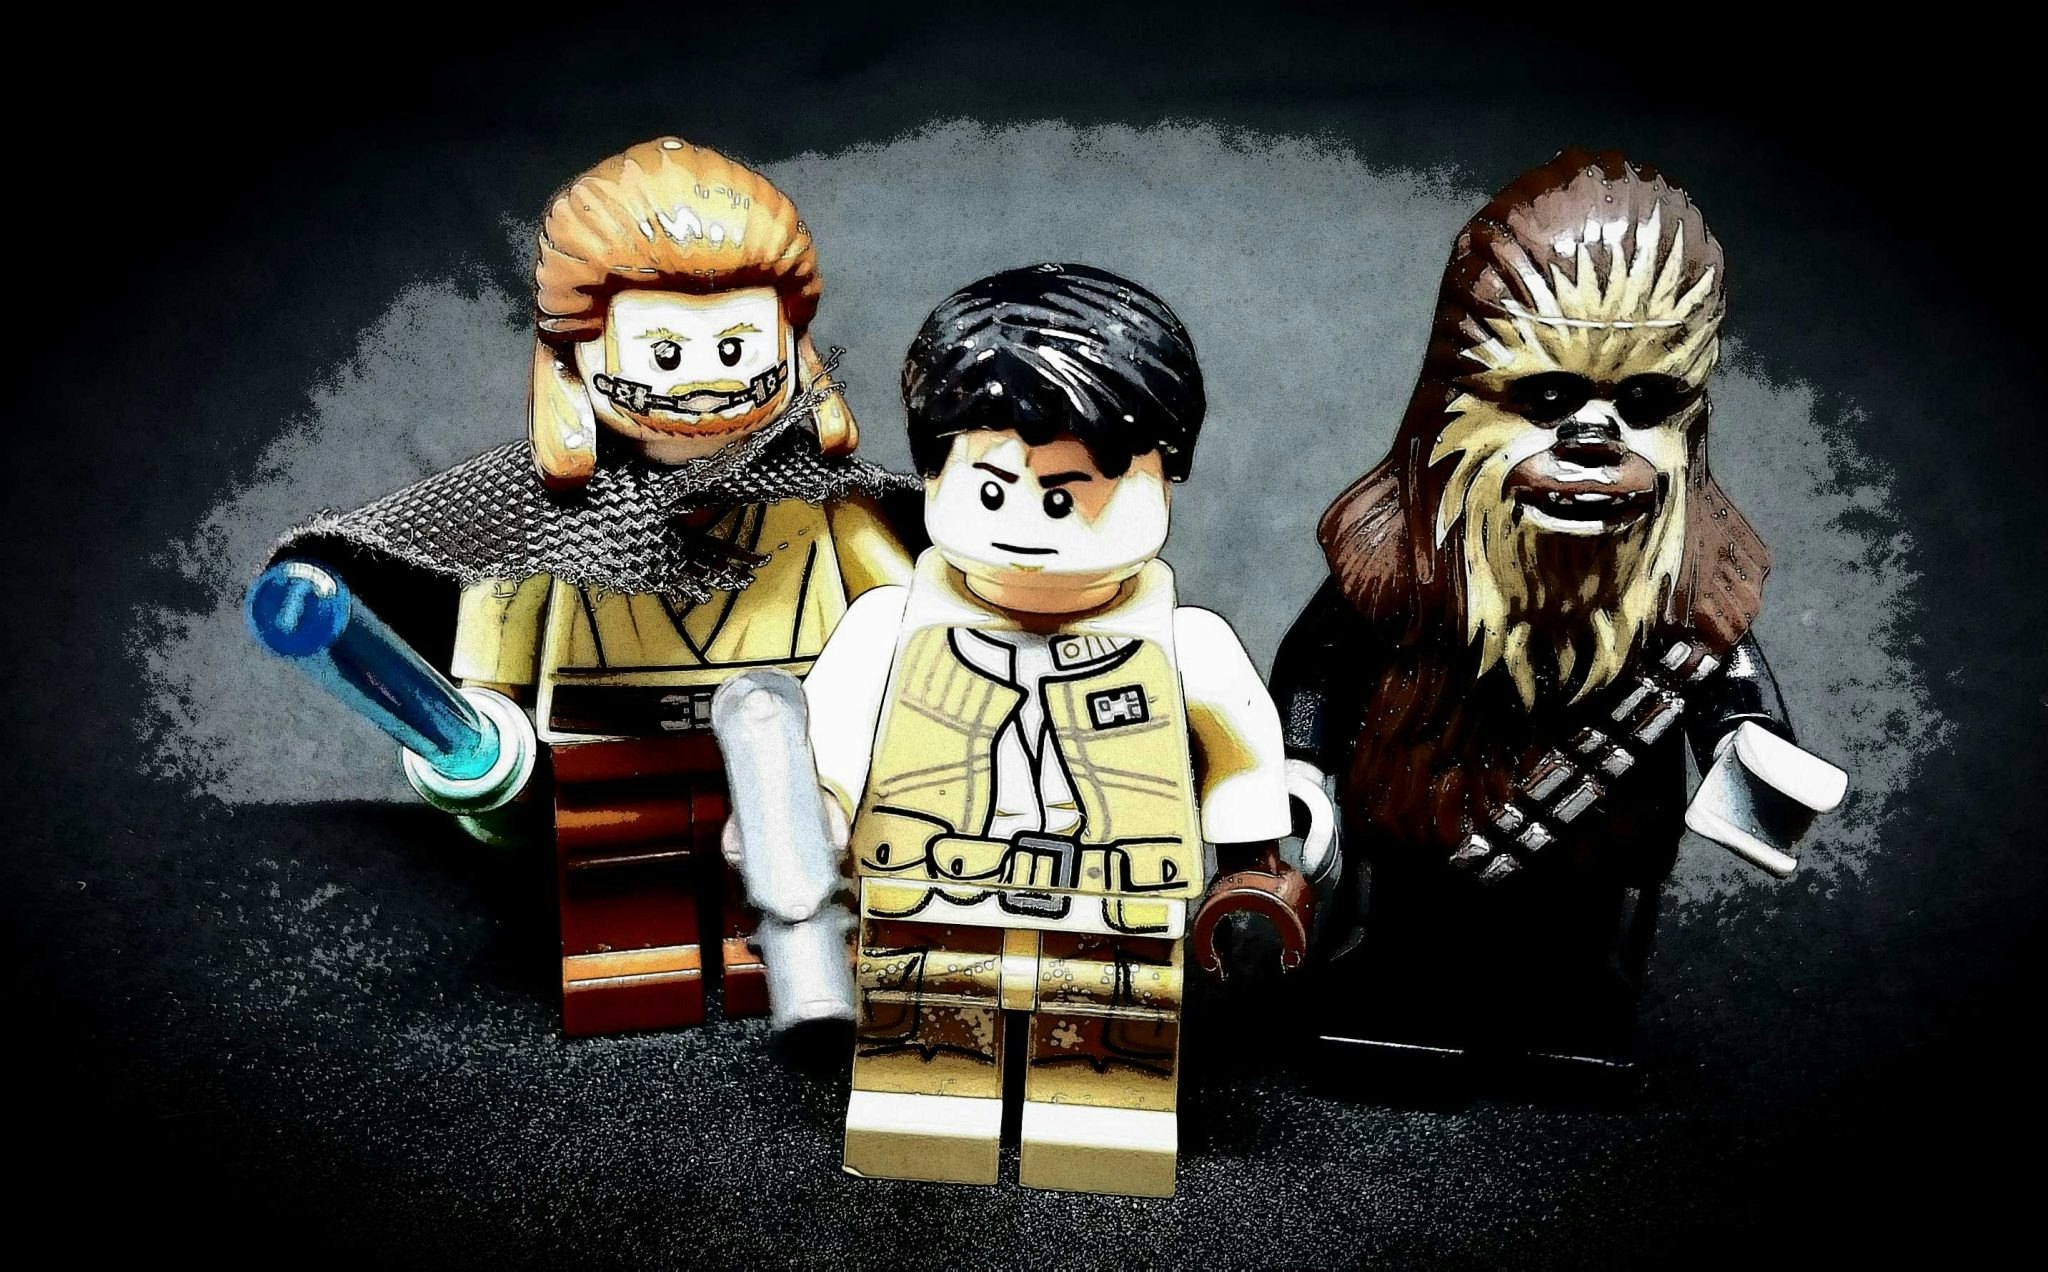 Star Wars Lego figures